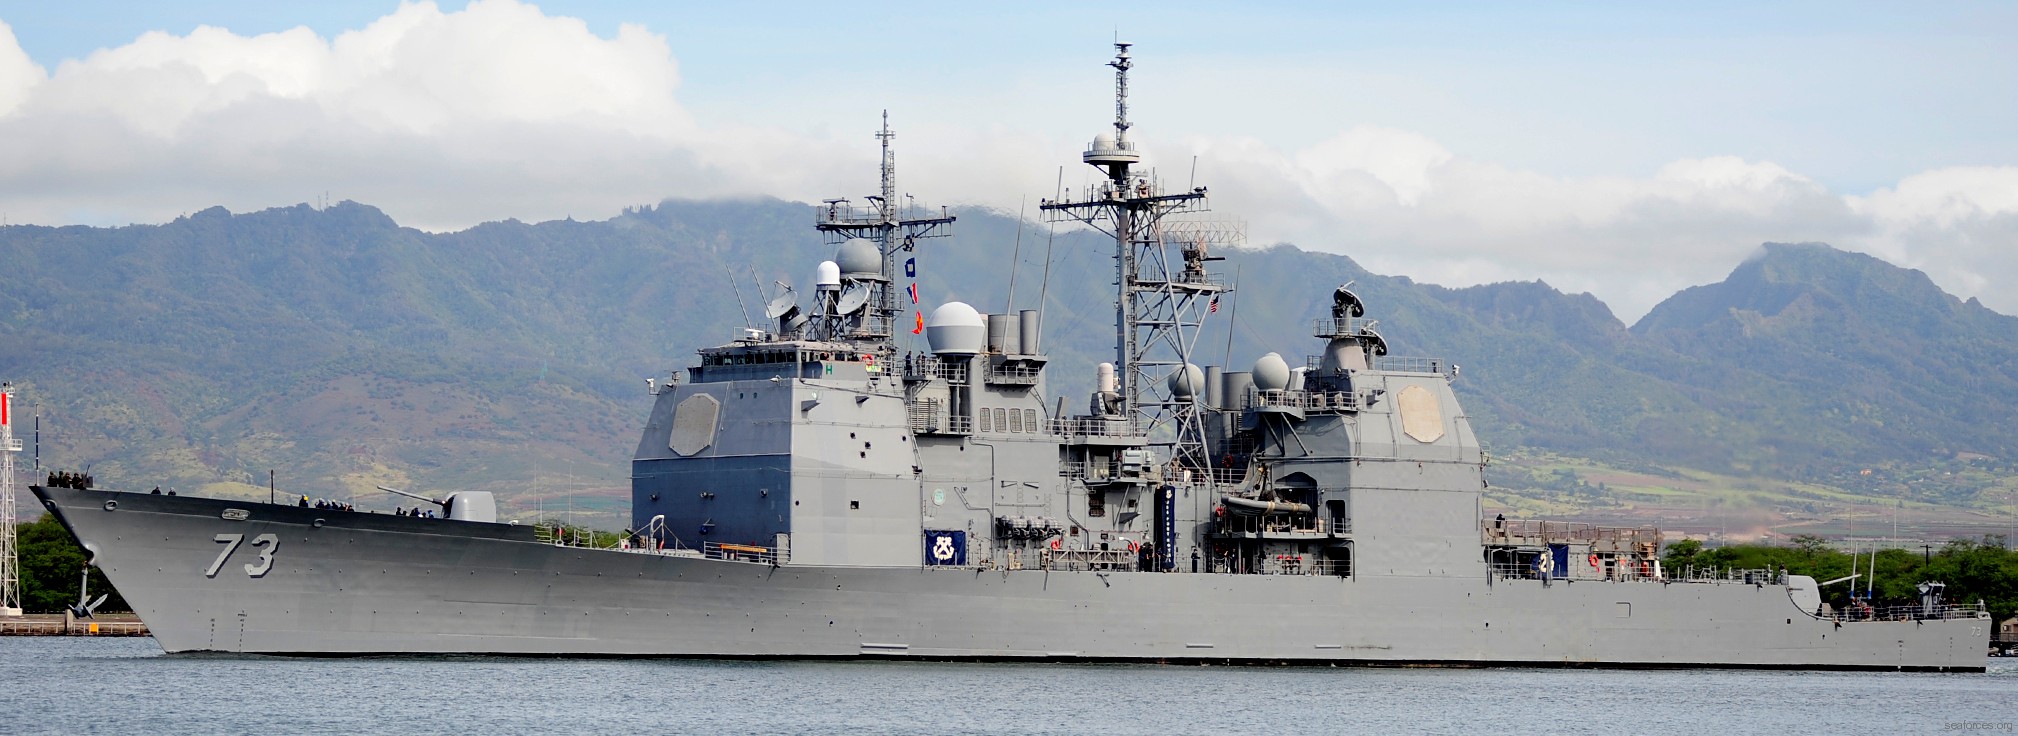 cg-73 uss port royal ticonderoga class guided missile cruiser navy 09 pearl harbor hawaii